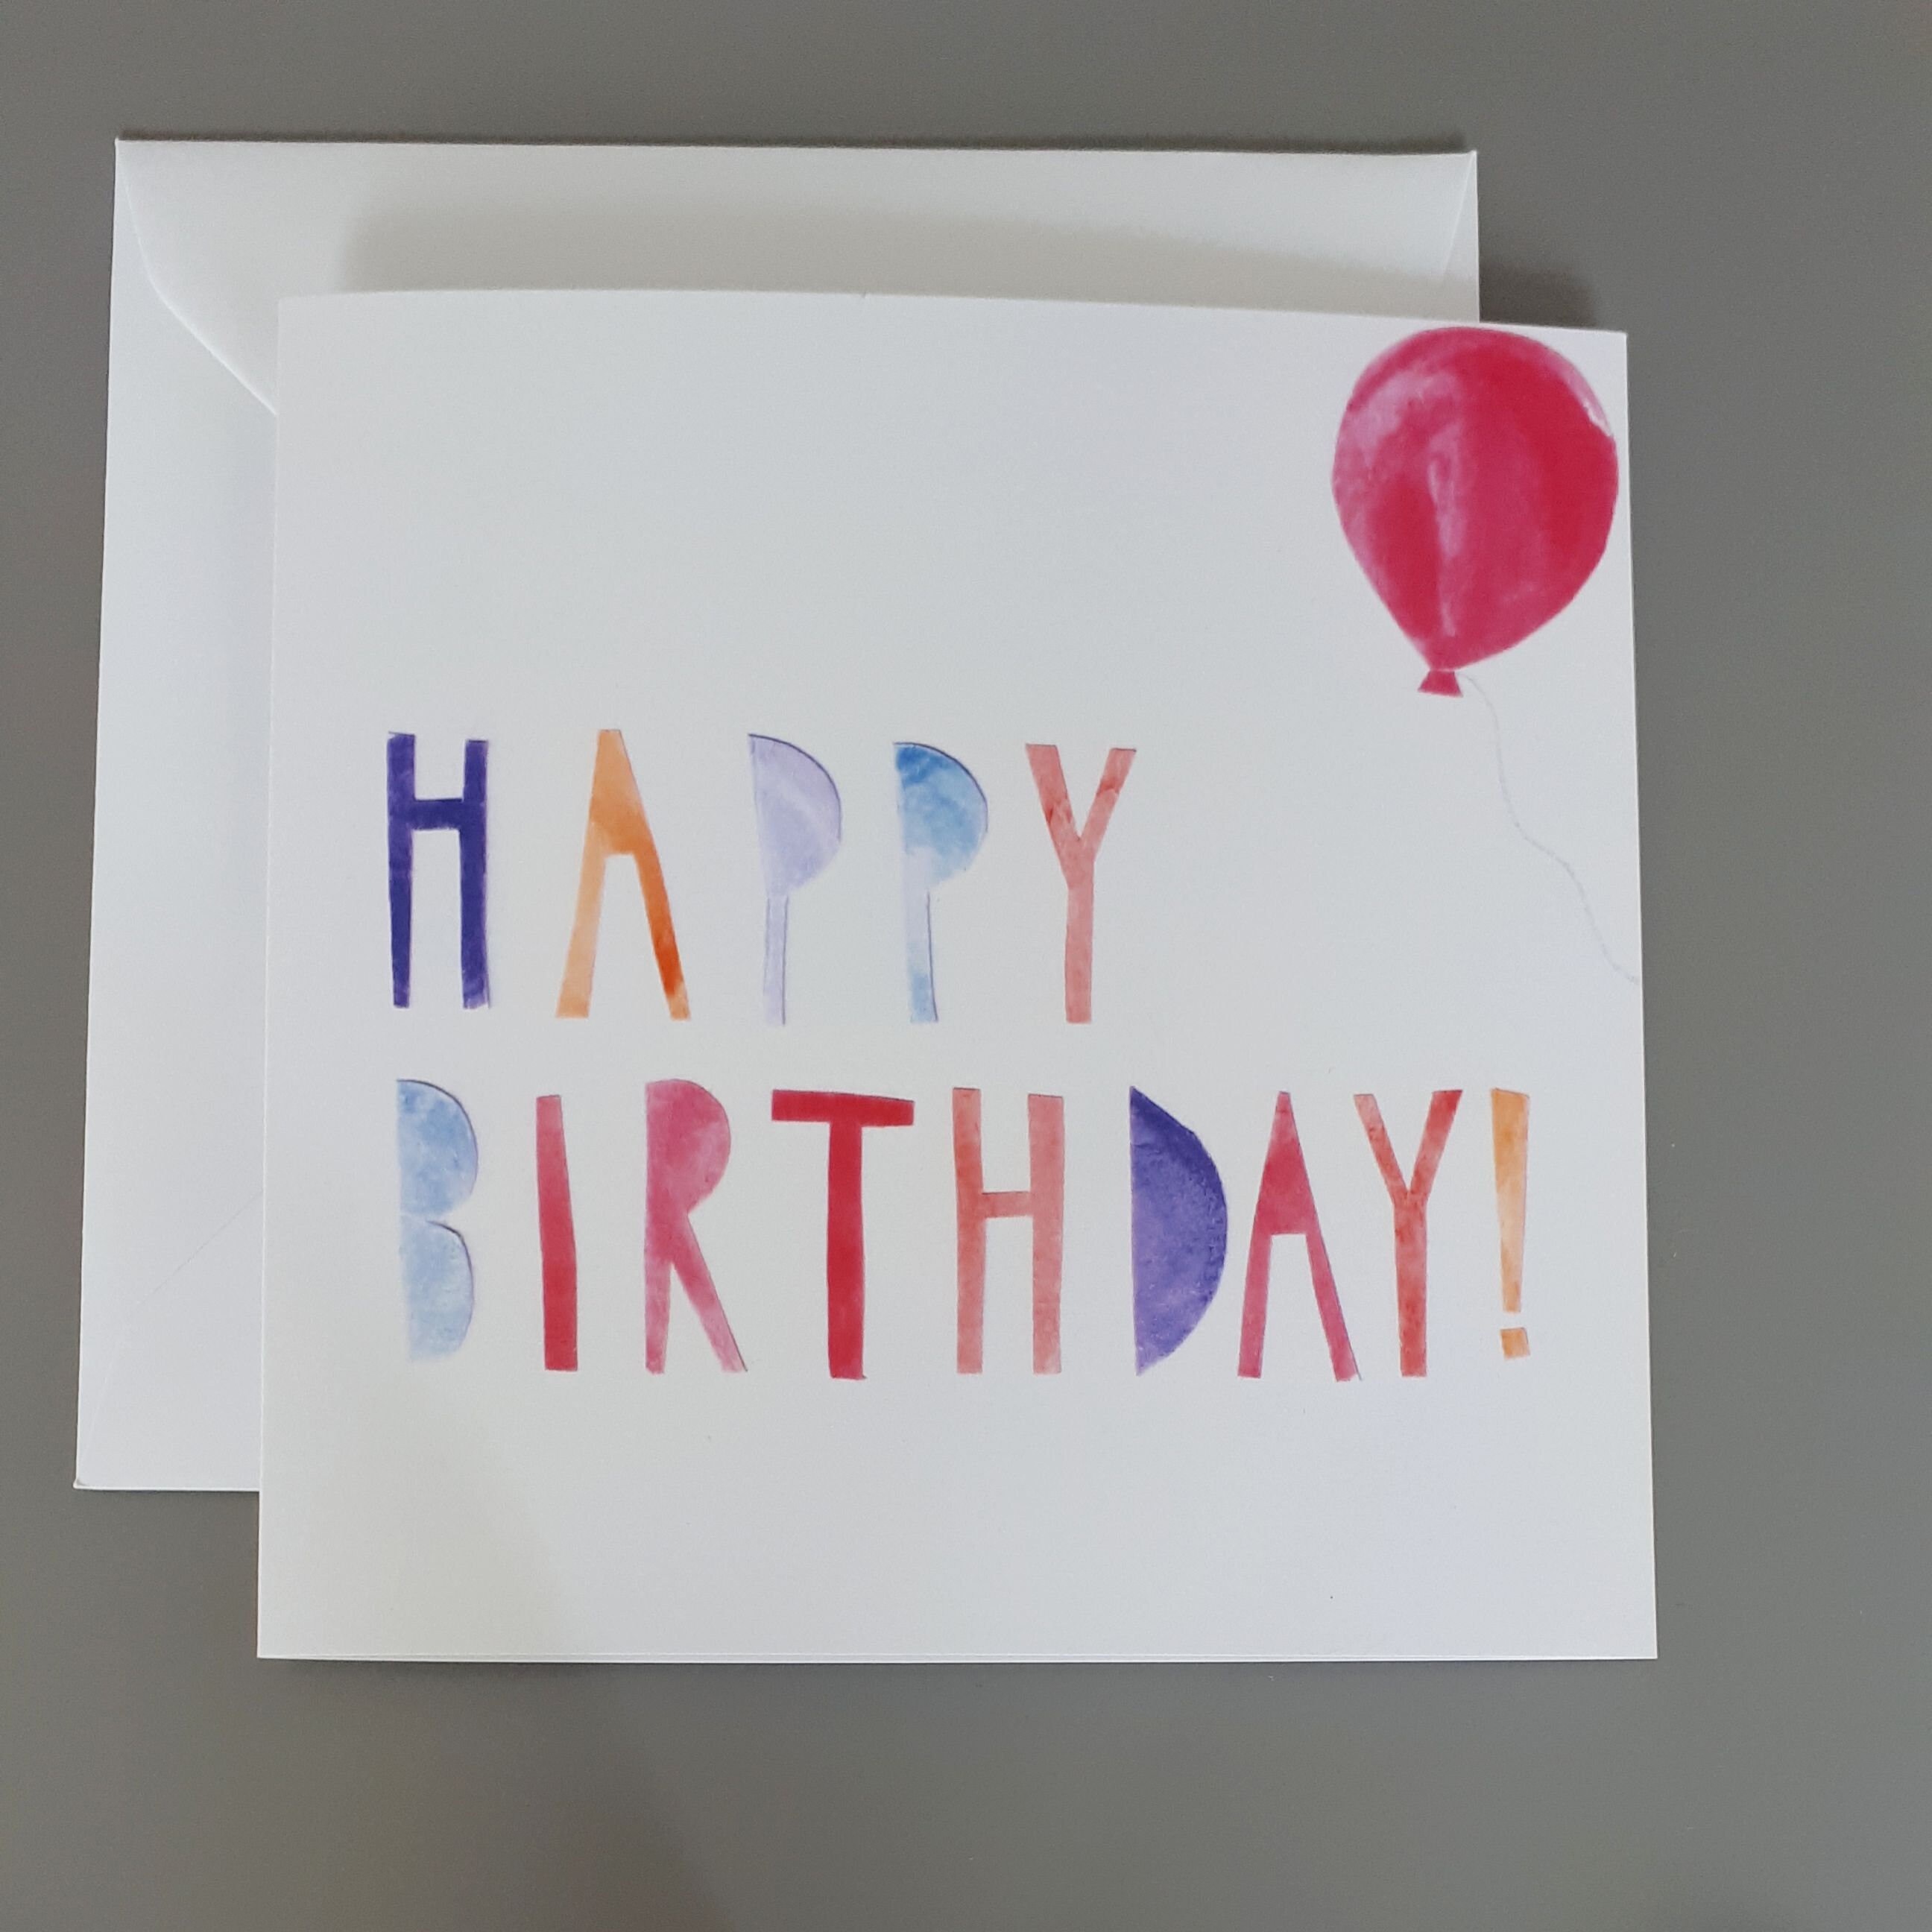 Happy birthday card with balloon | Etsy